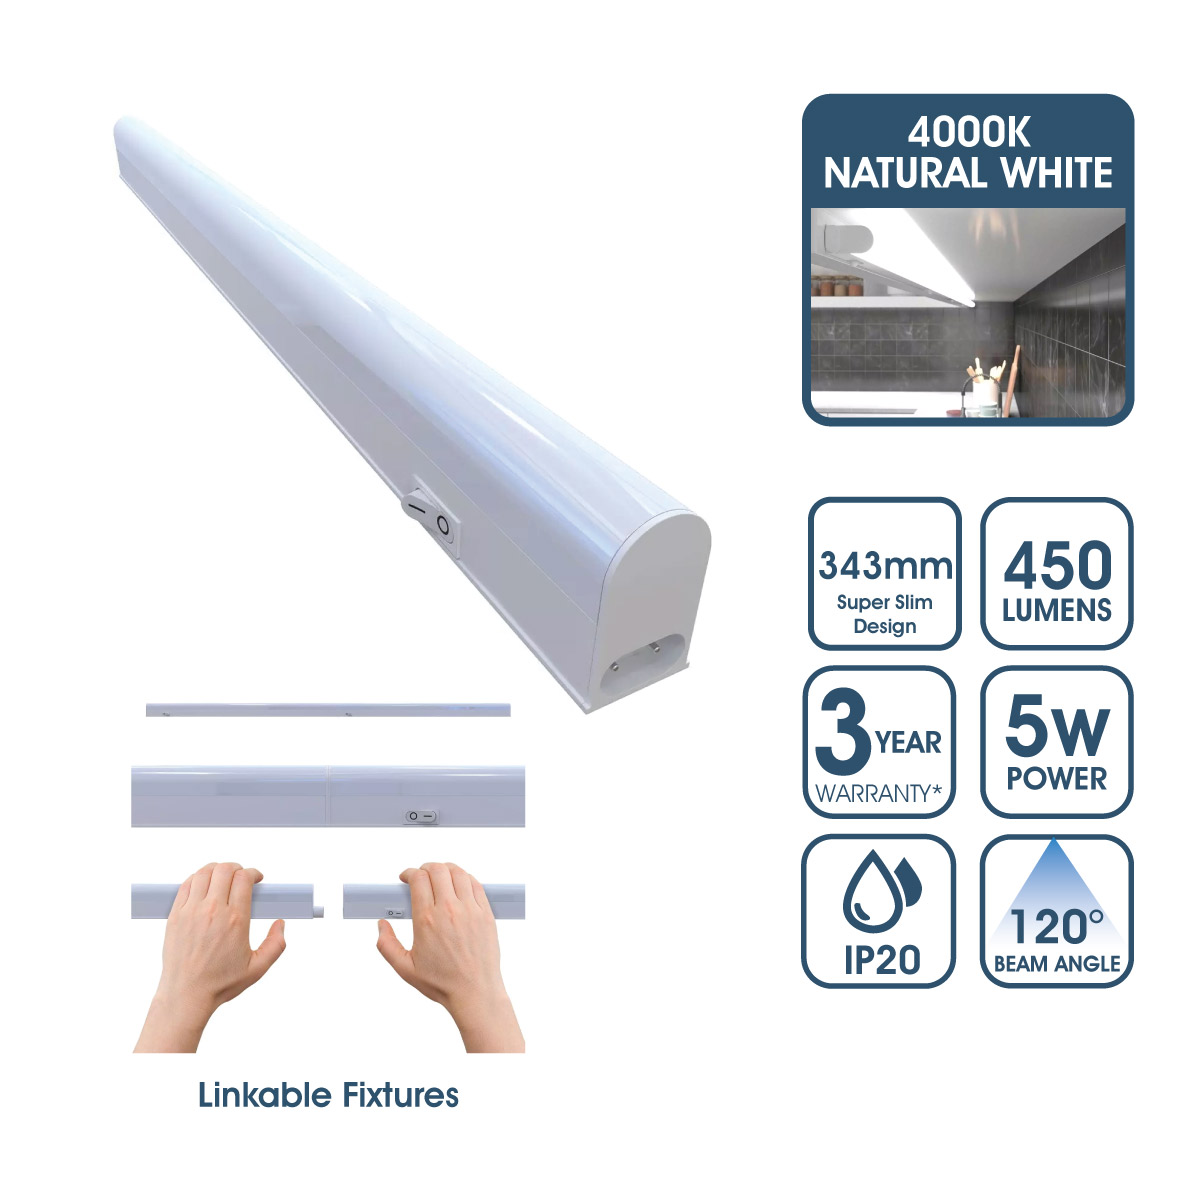 View 343mm Linkable LED Ultraslim Under Cabinet Light Fitting Natural White information